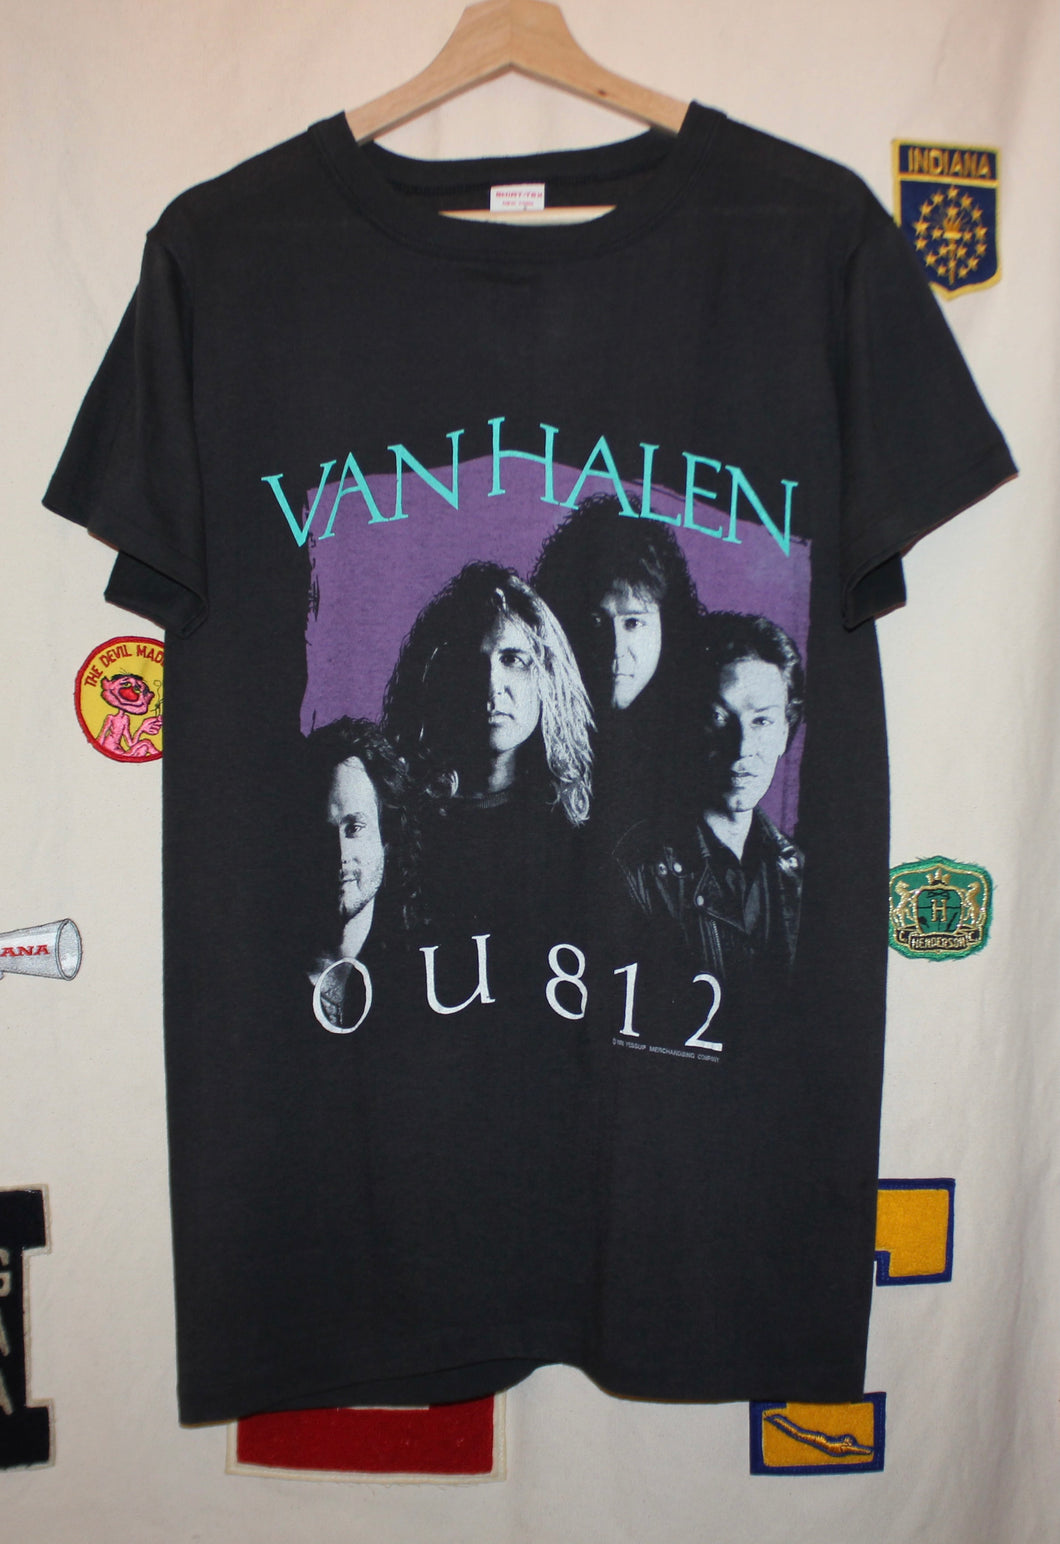 1988 Van Halen OU812 Tour T-Shirt: XL